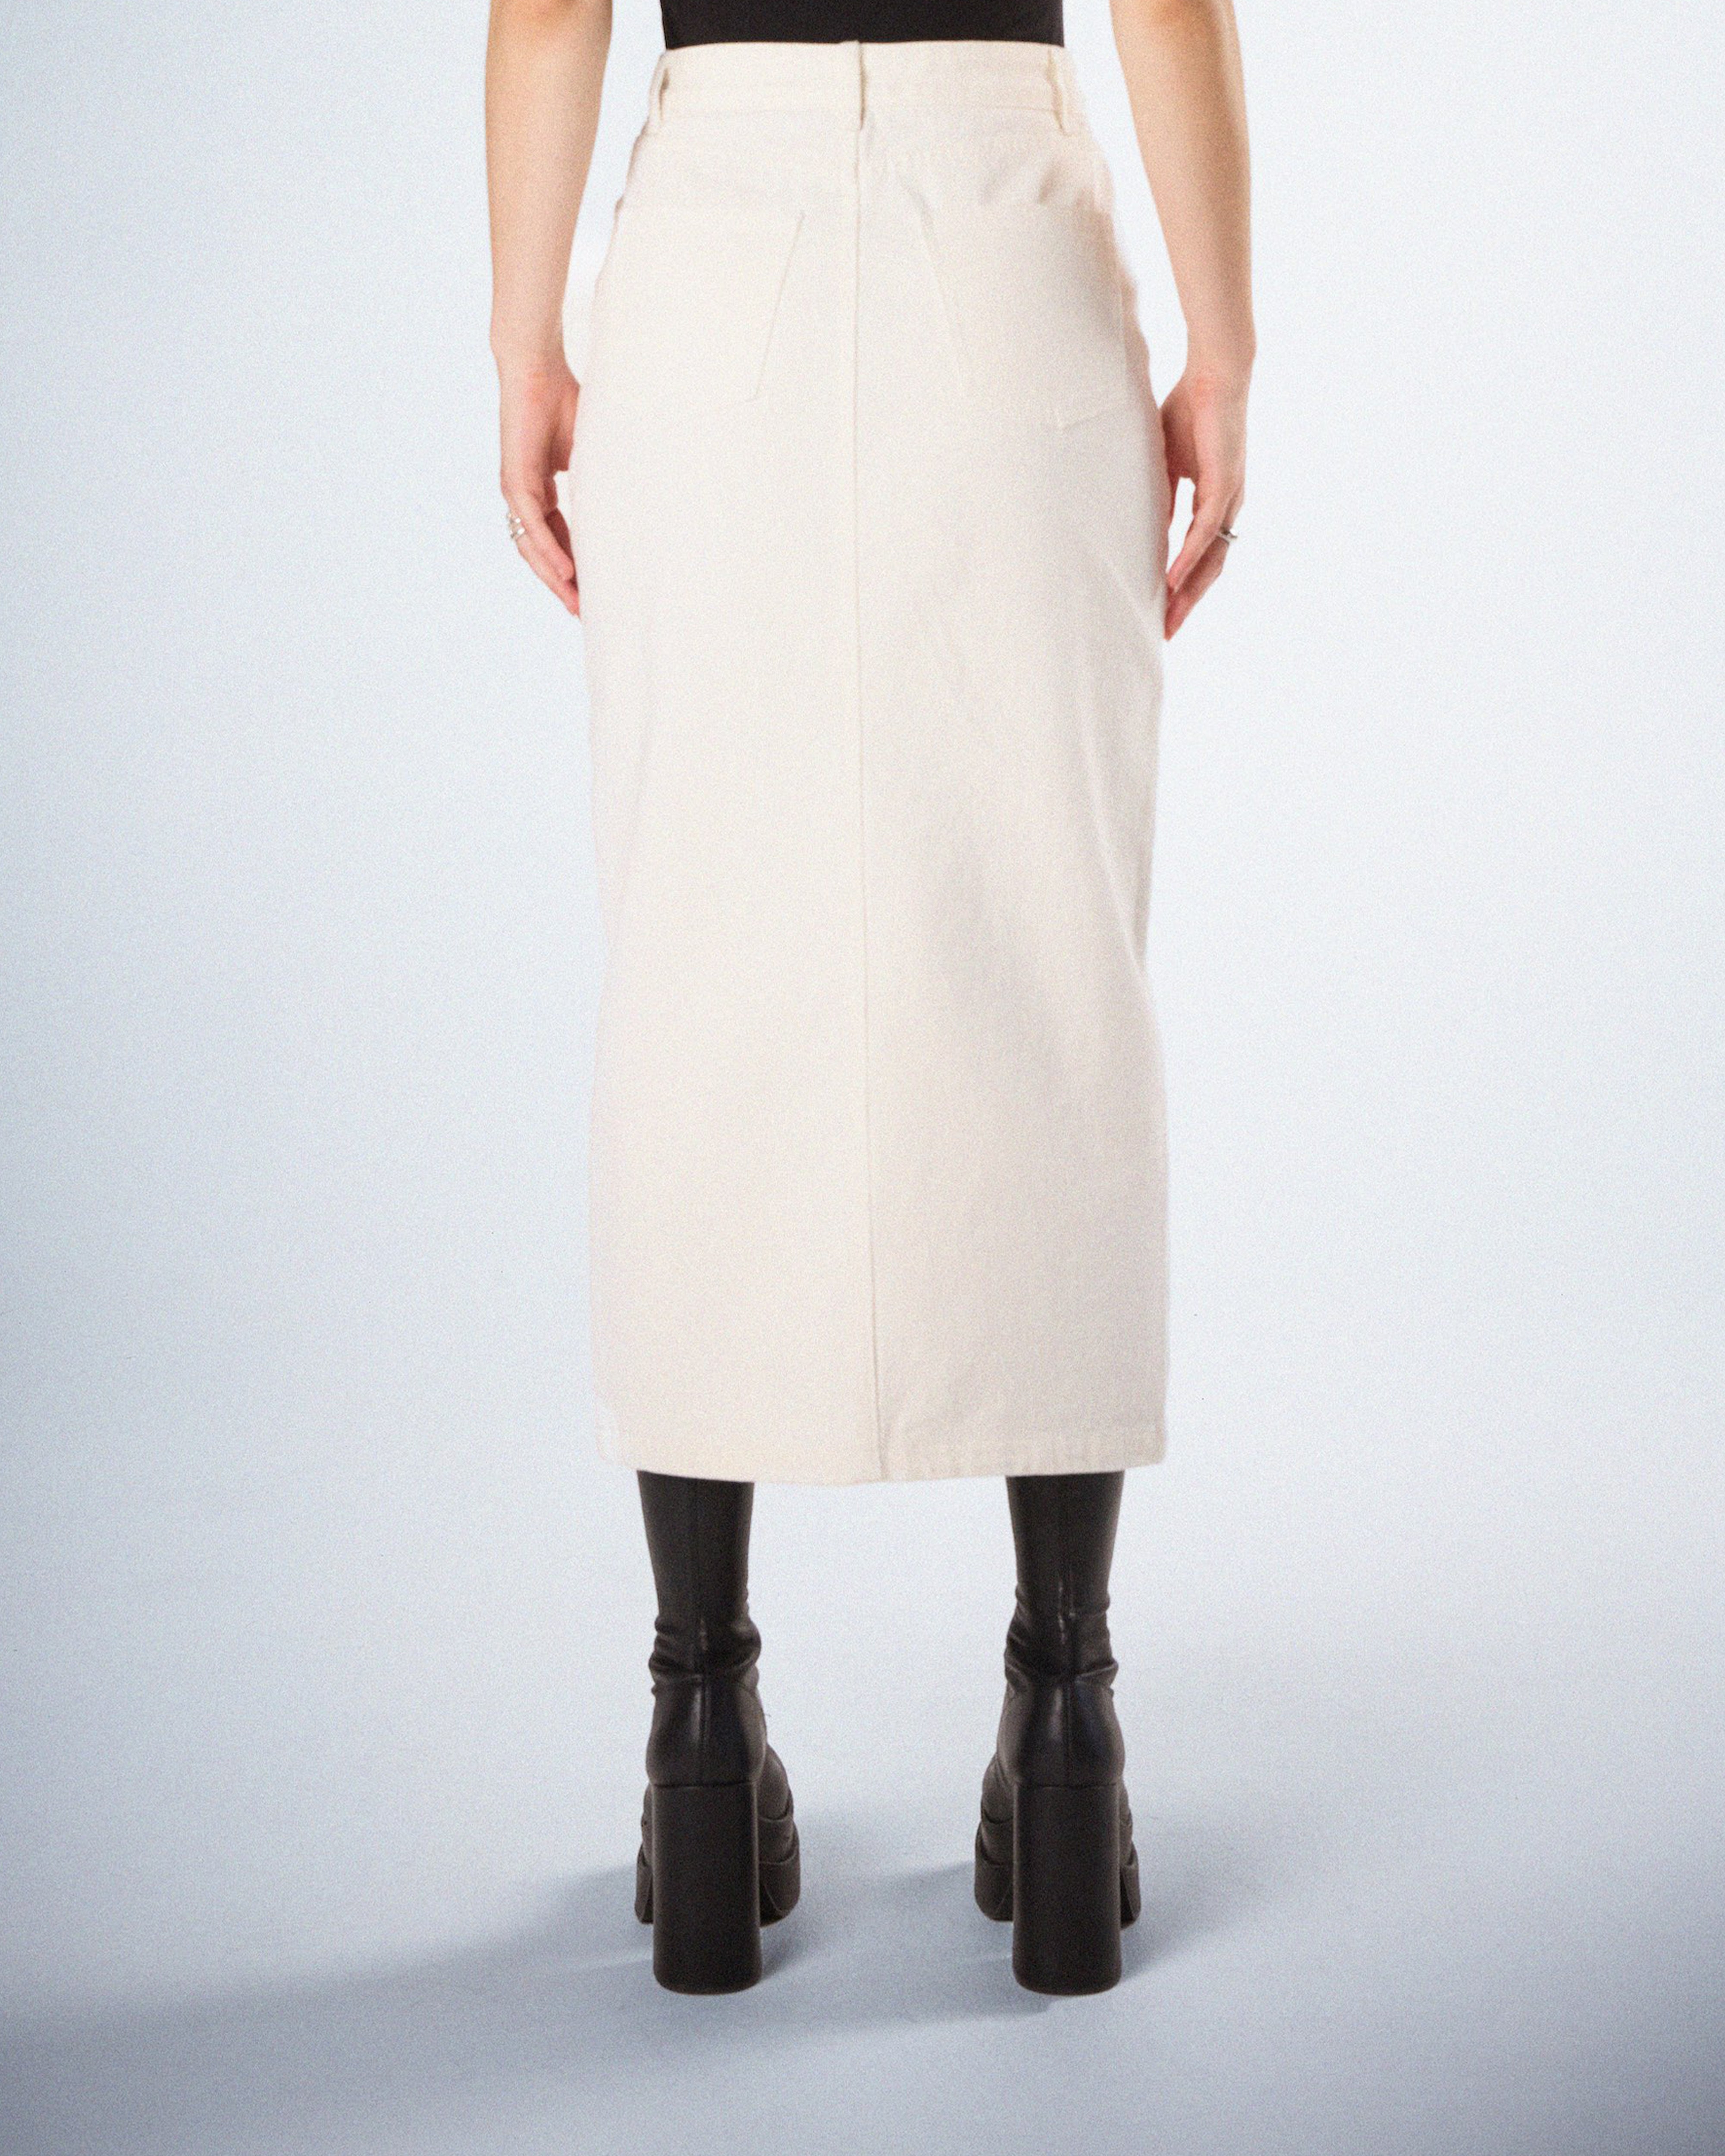 JDA White Denim Skirt (FINAL SALE) | White denim skirt, White denim pencil  skirt, Pencil skirt white